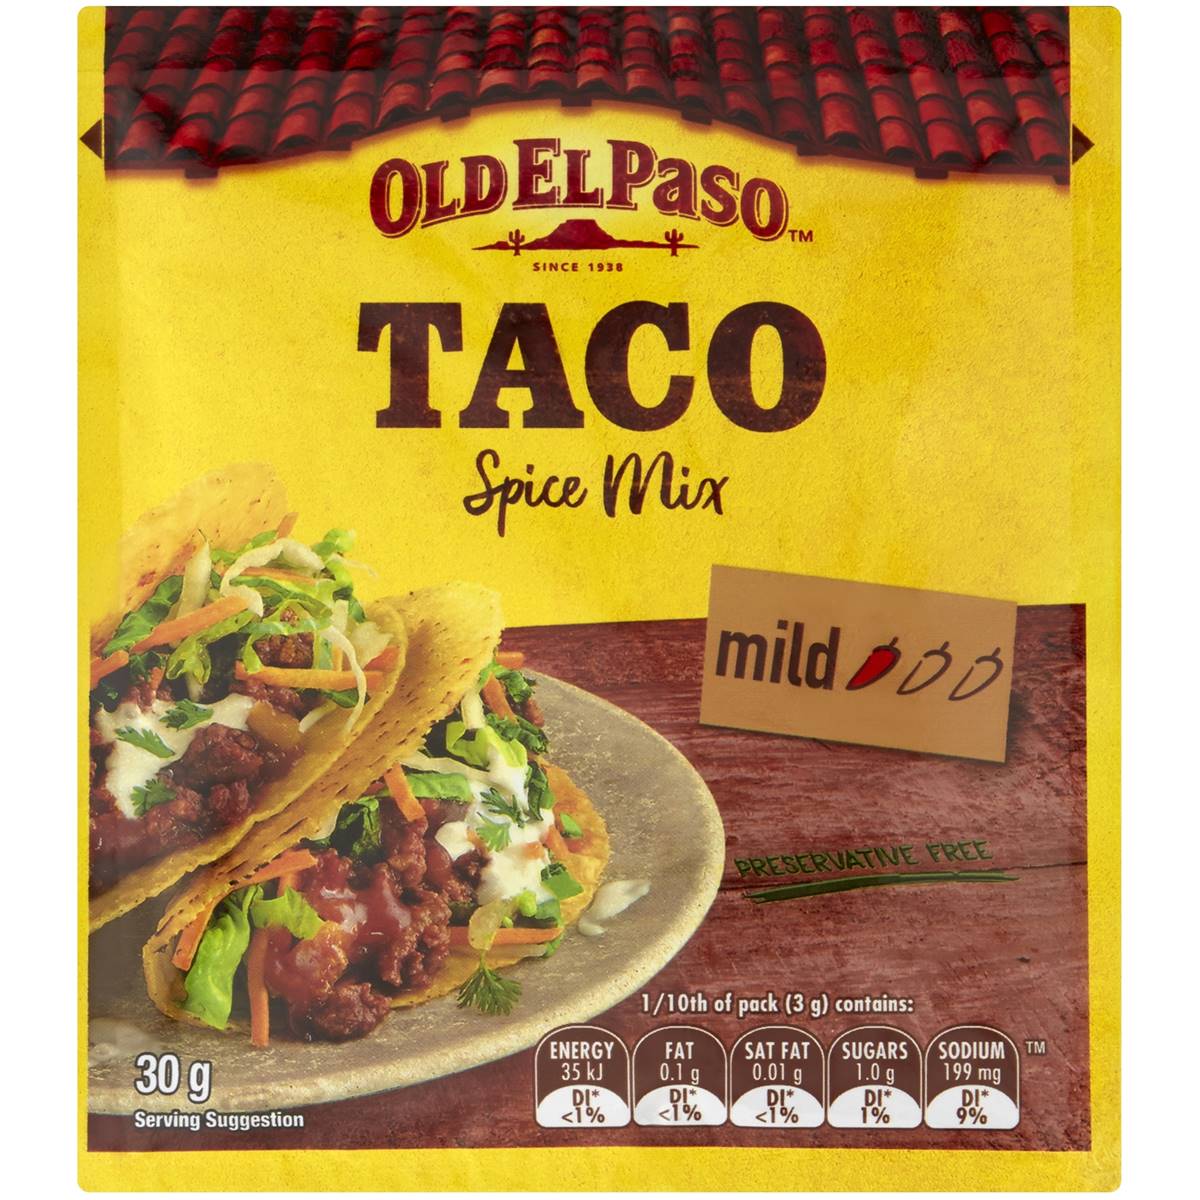 Old El Paso Taco Spice Mix Taco Spice Mix 30g